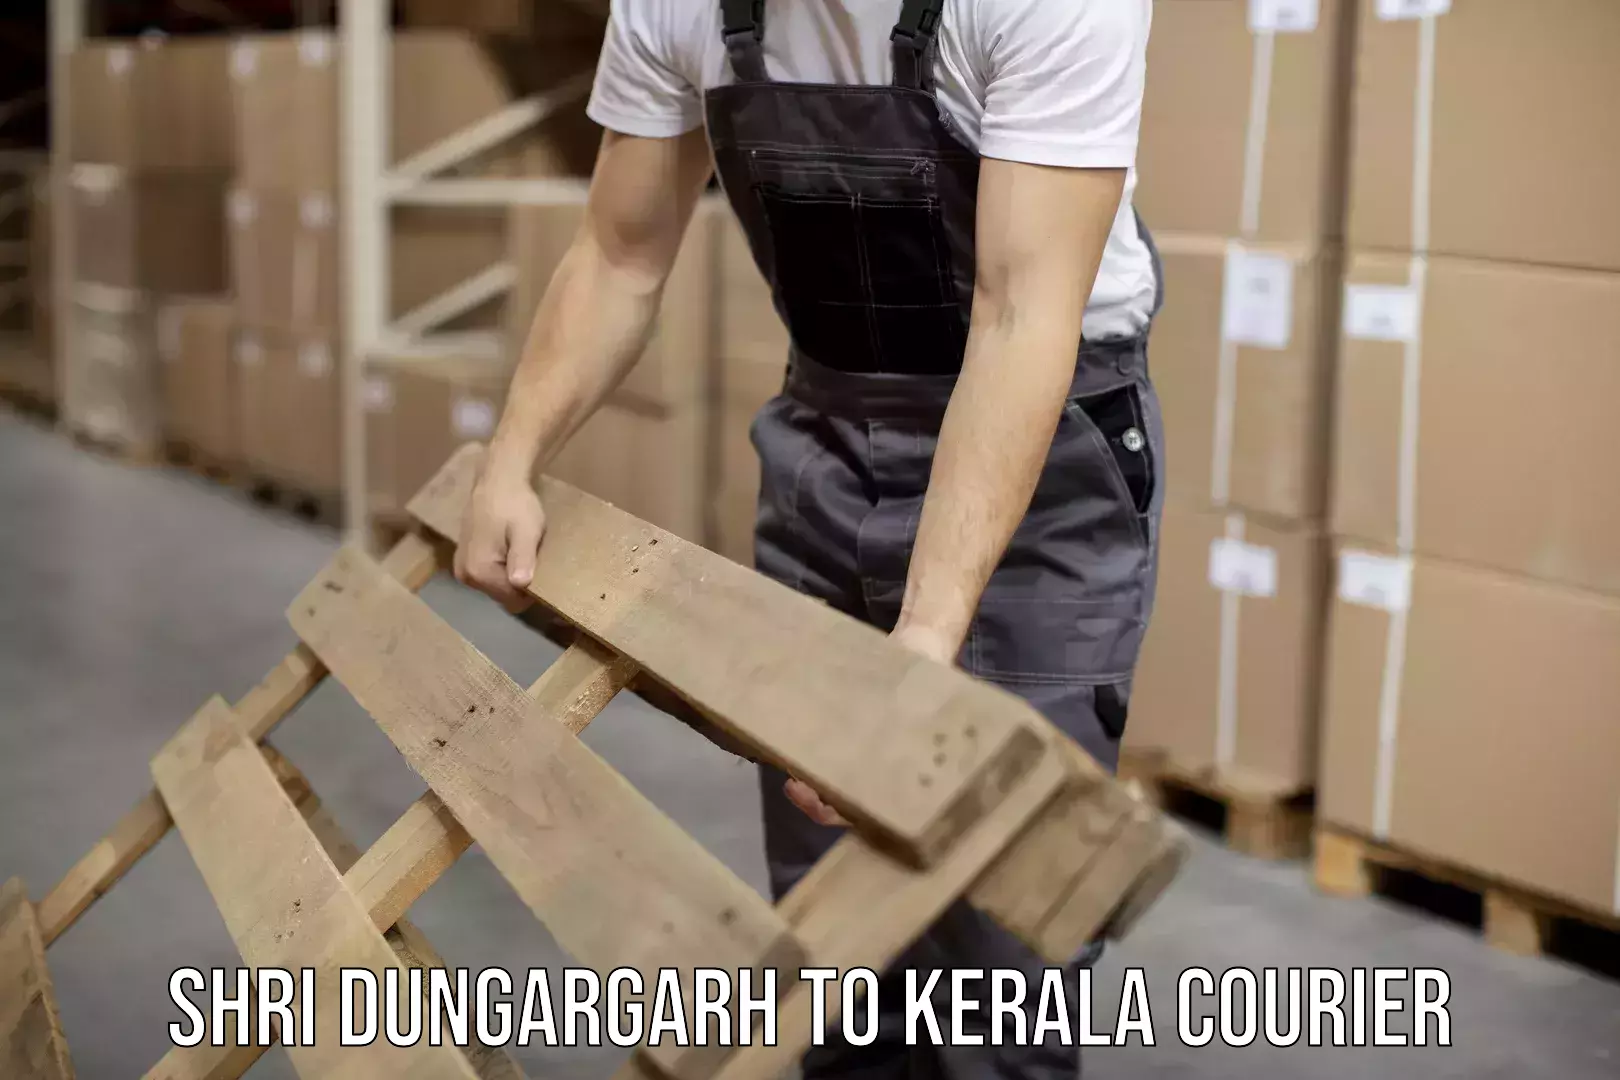 Courier service comparison Shri Dungargarh to Munnar